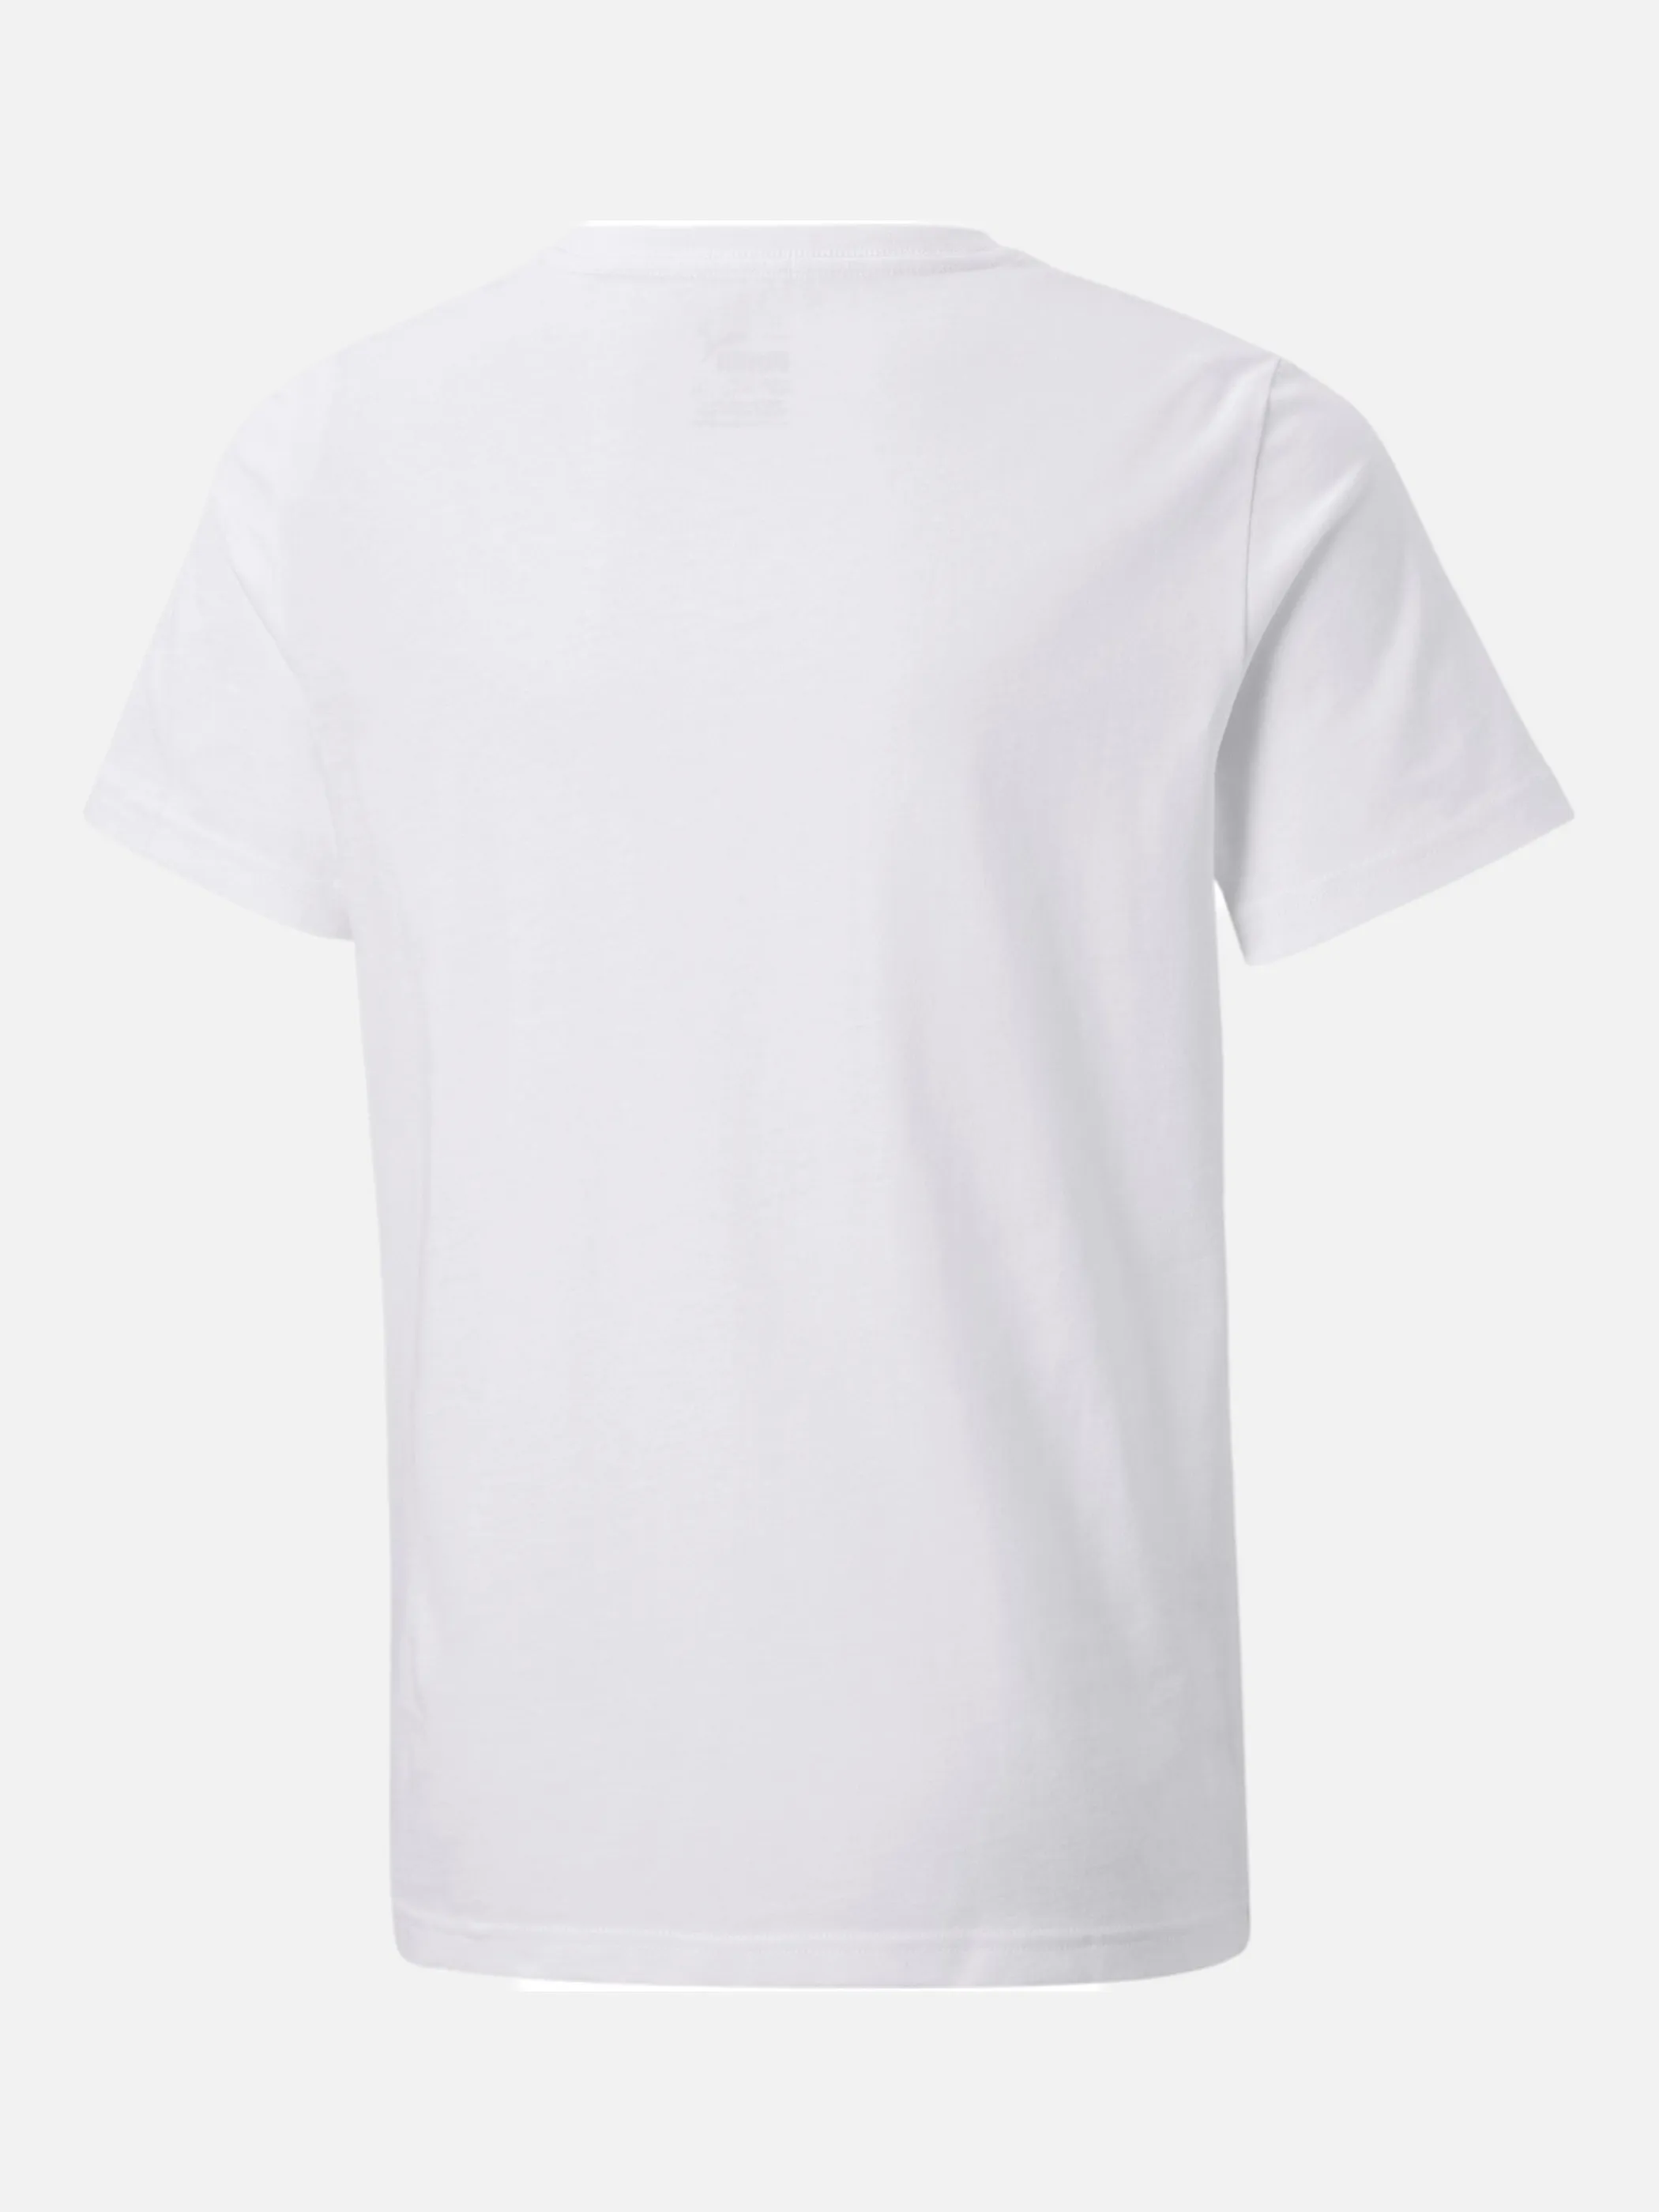 Puma 586985 Kn-T-Shirt, Logo Weiß 846742 83 2